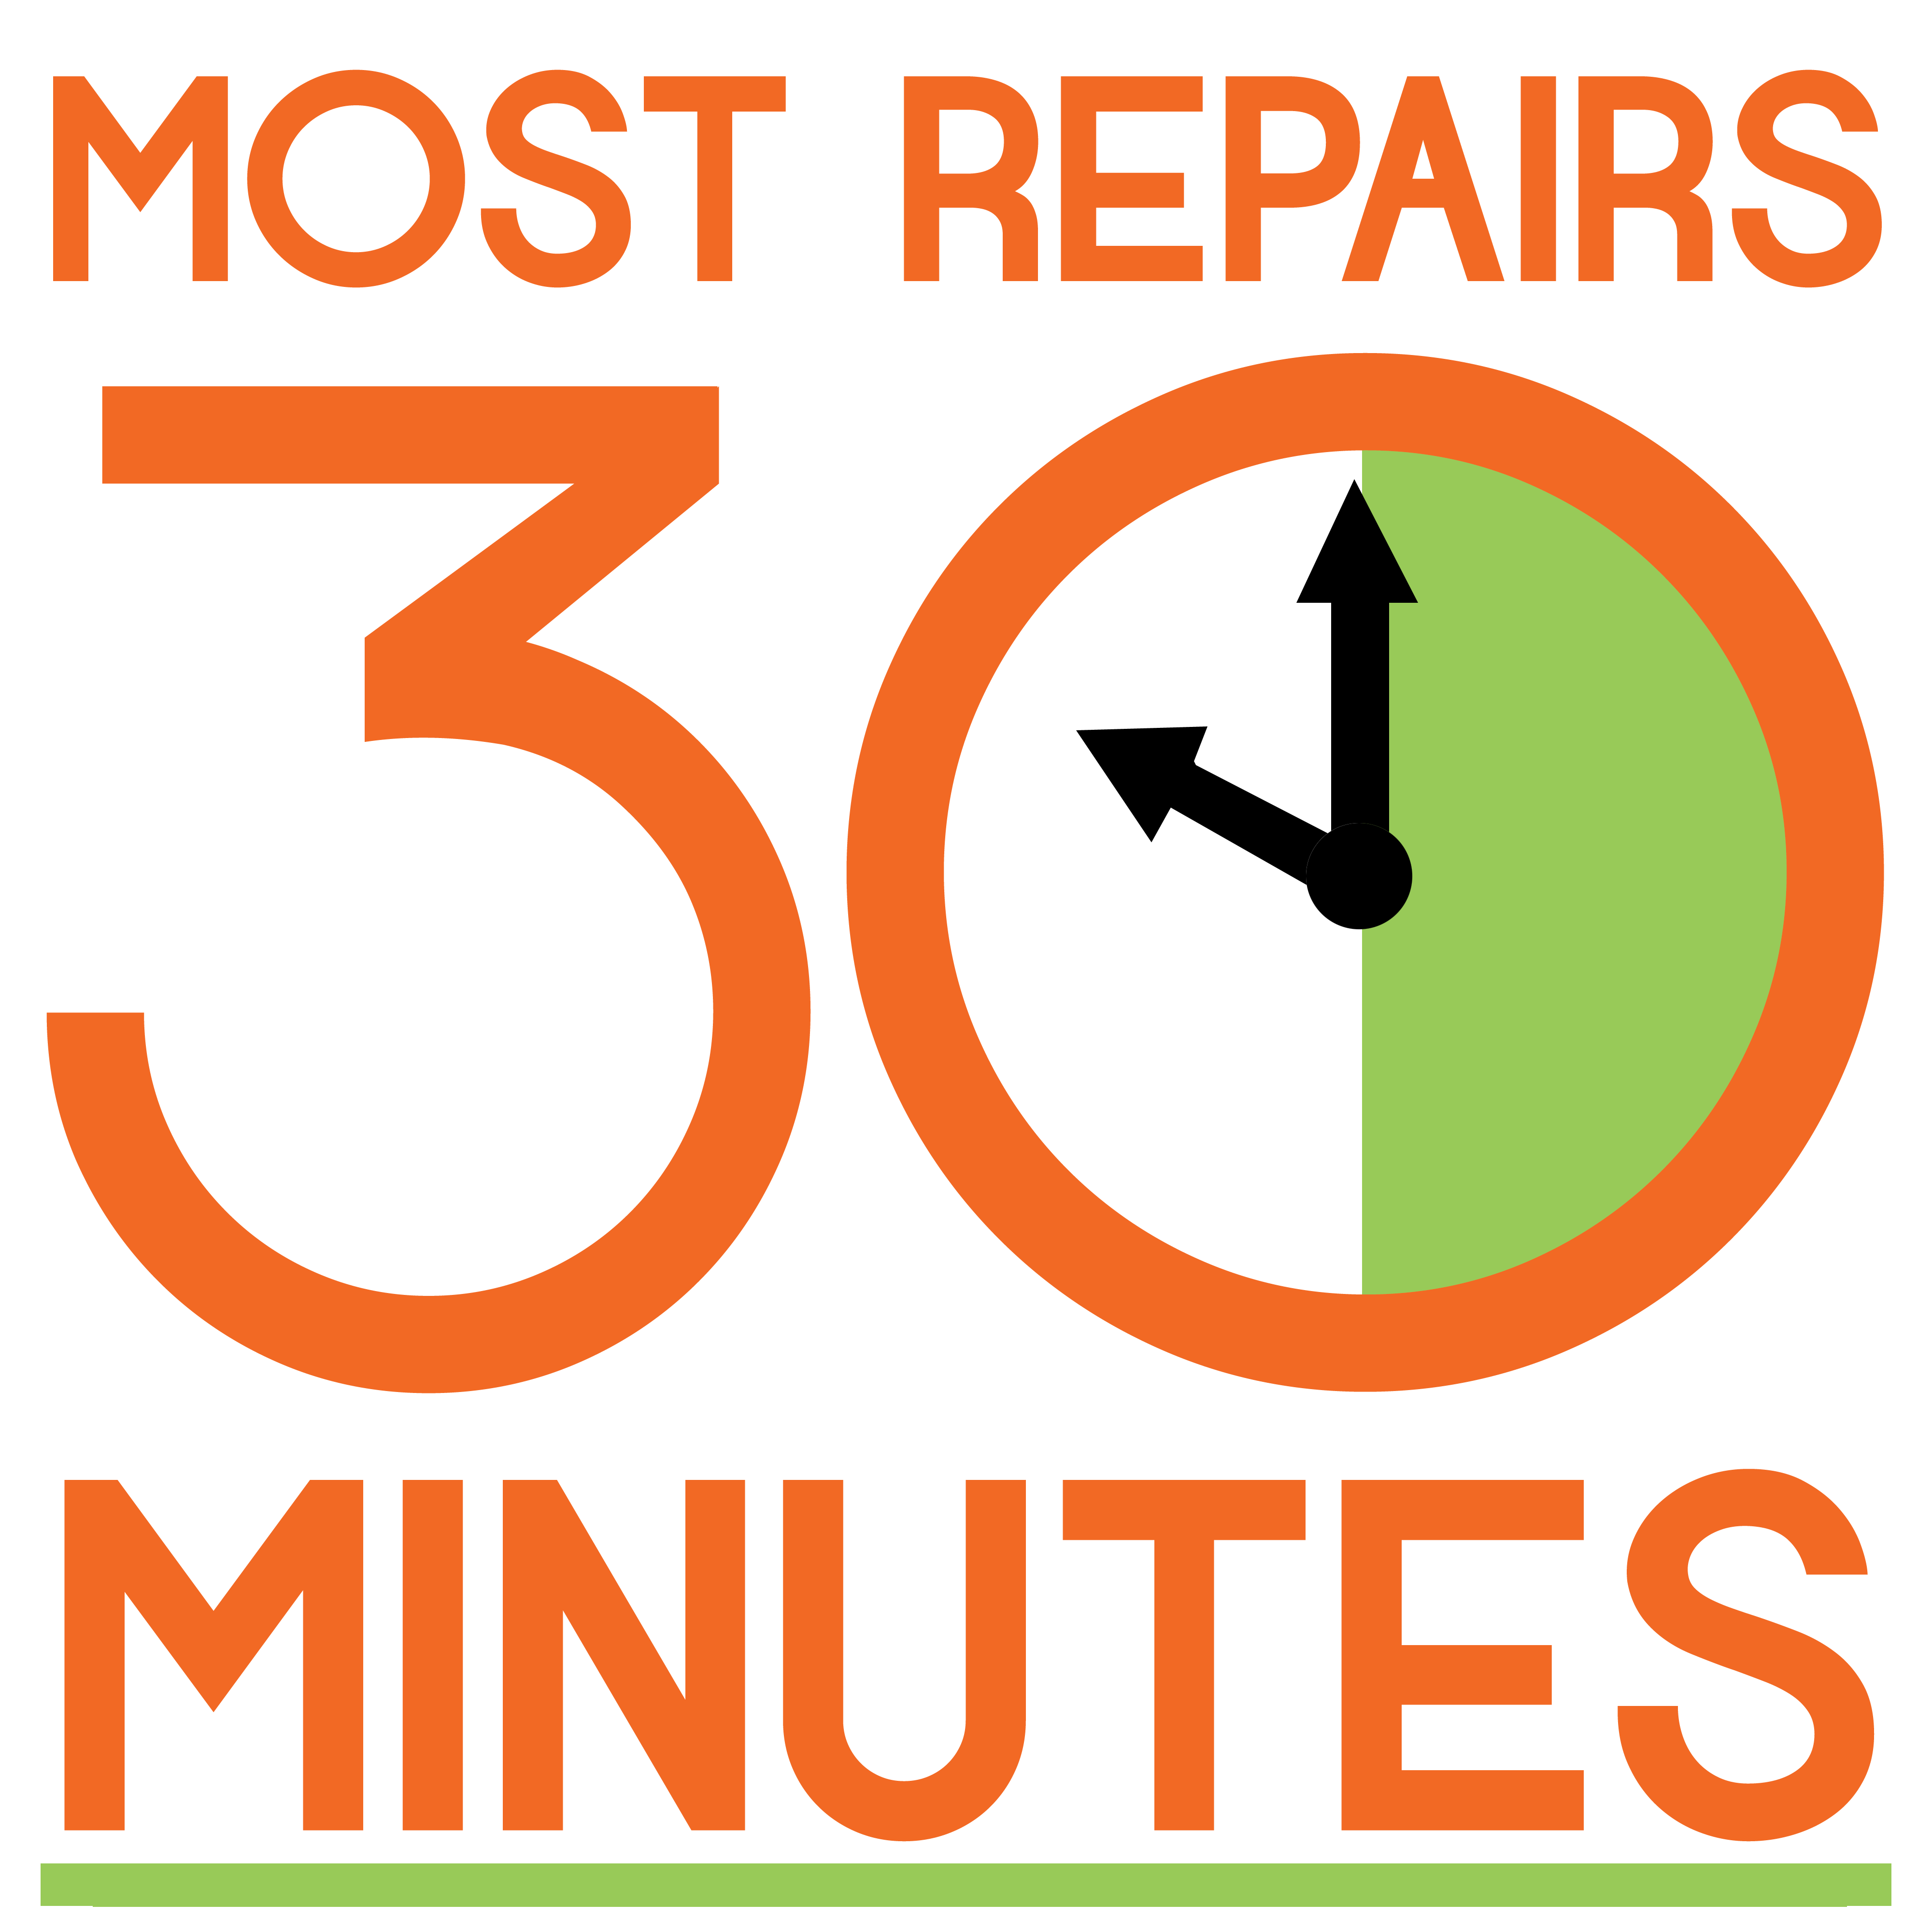 Most repairs under 30 minutes